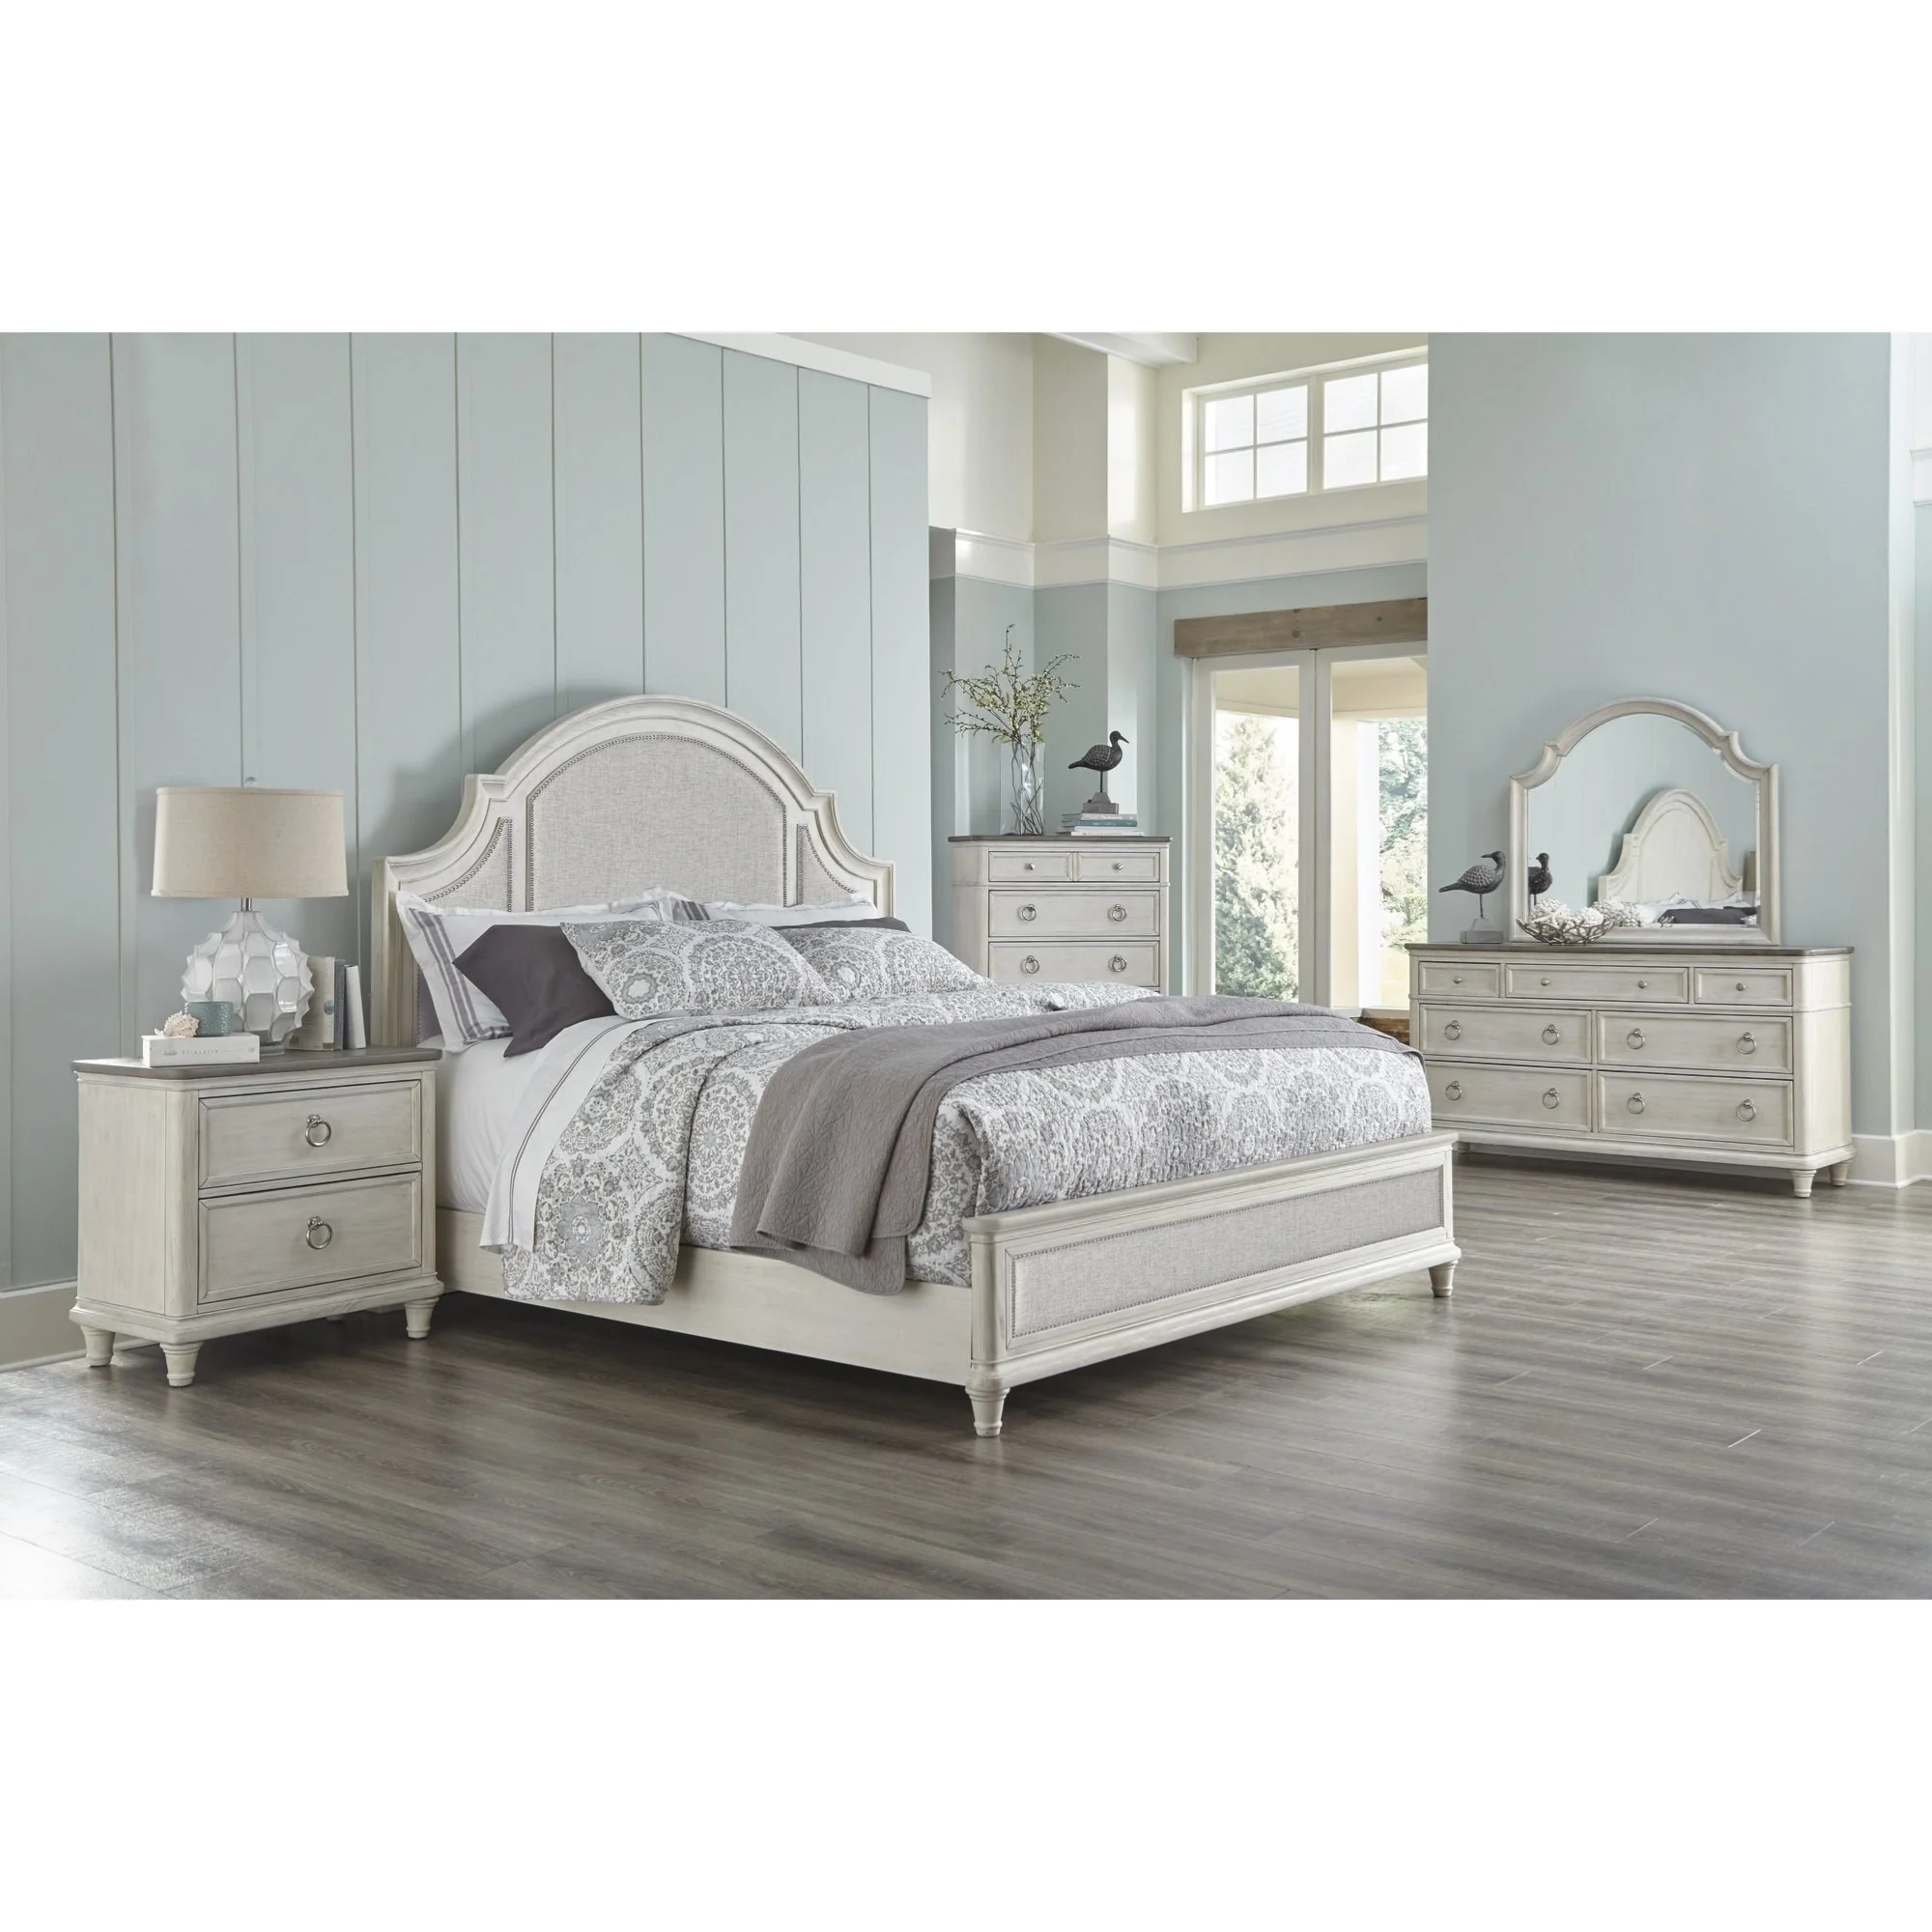 Bramble Bedroom Normandy Bed 28332 - Pamaro Shop Furniture